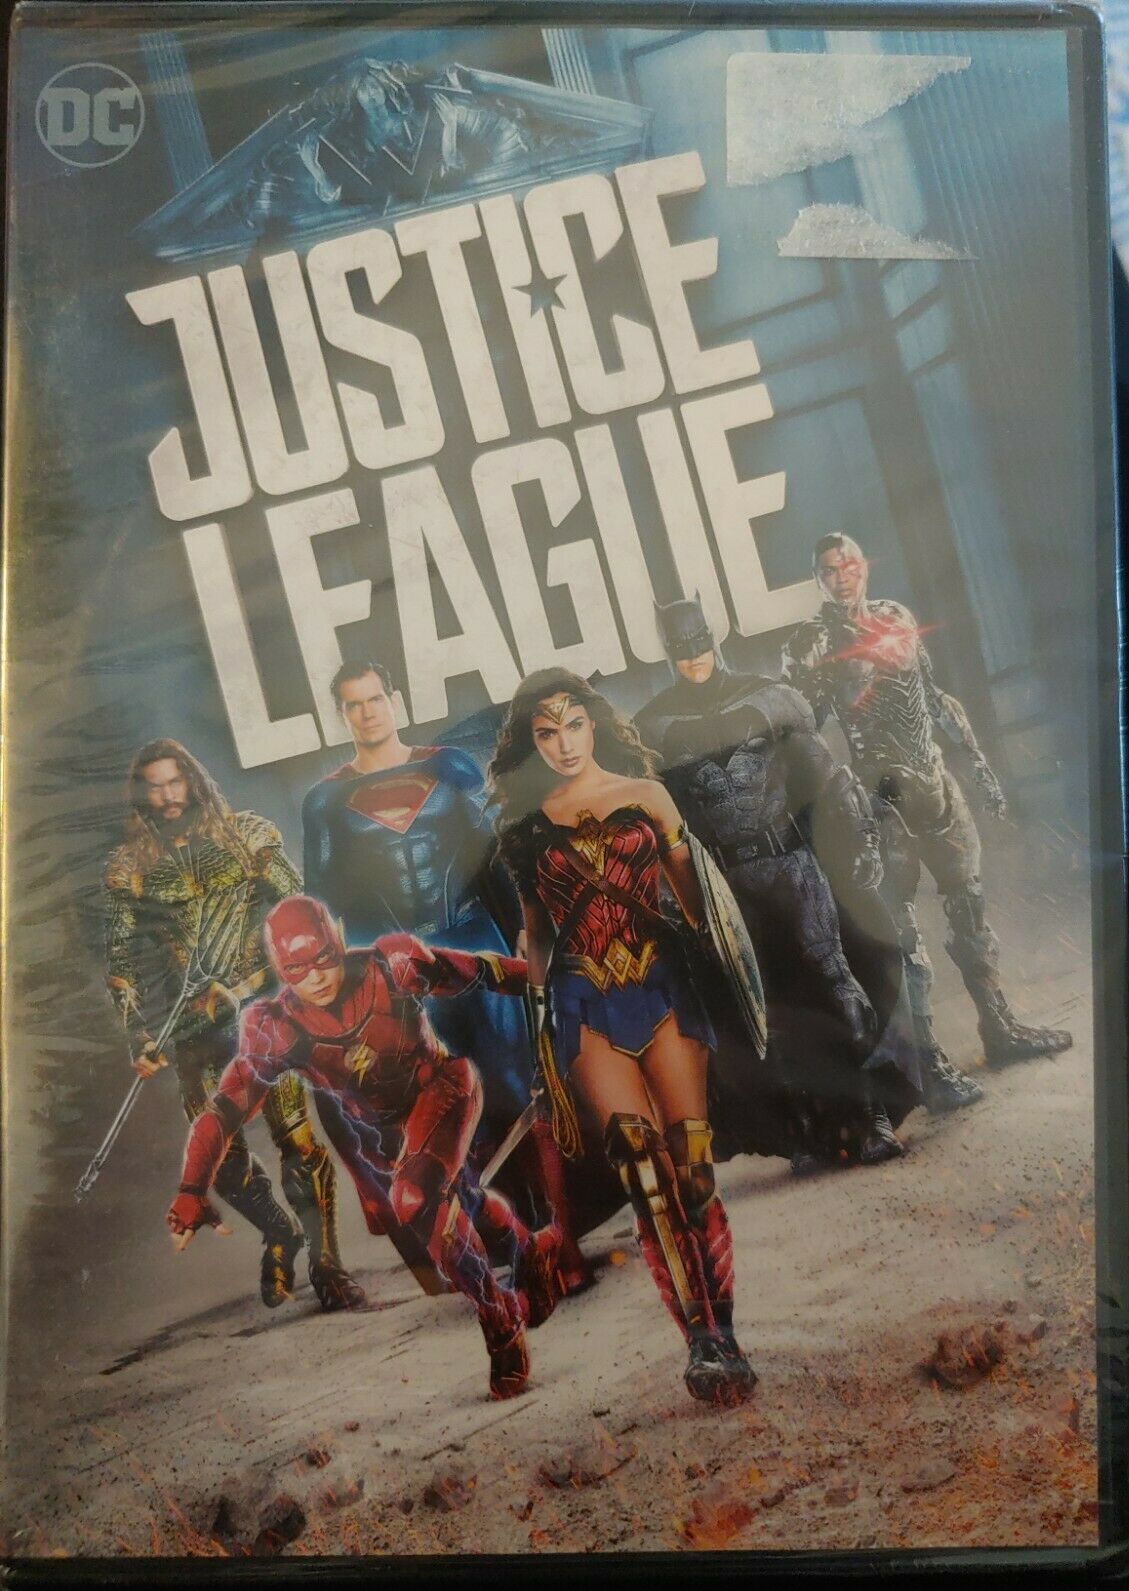 Justice League - Darkside Records